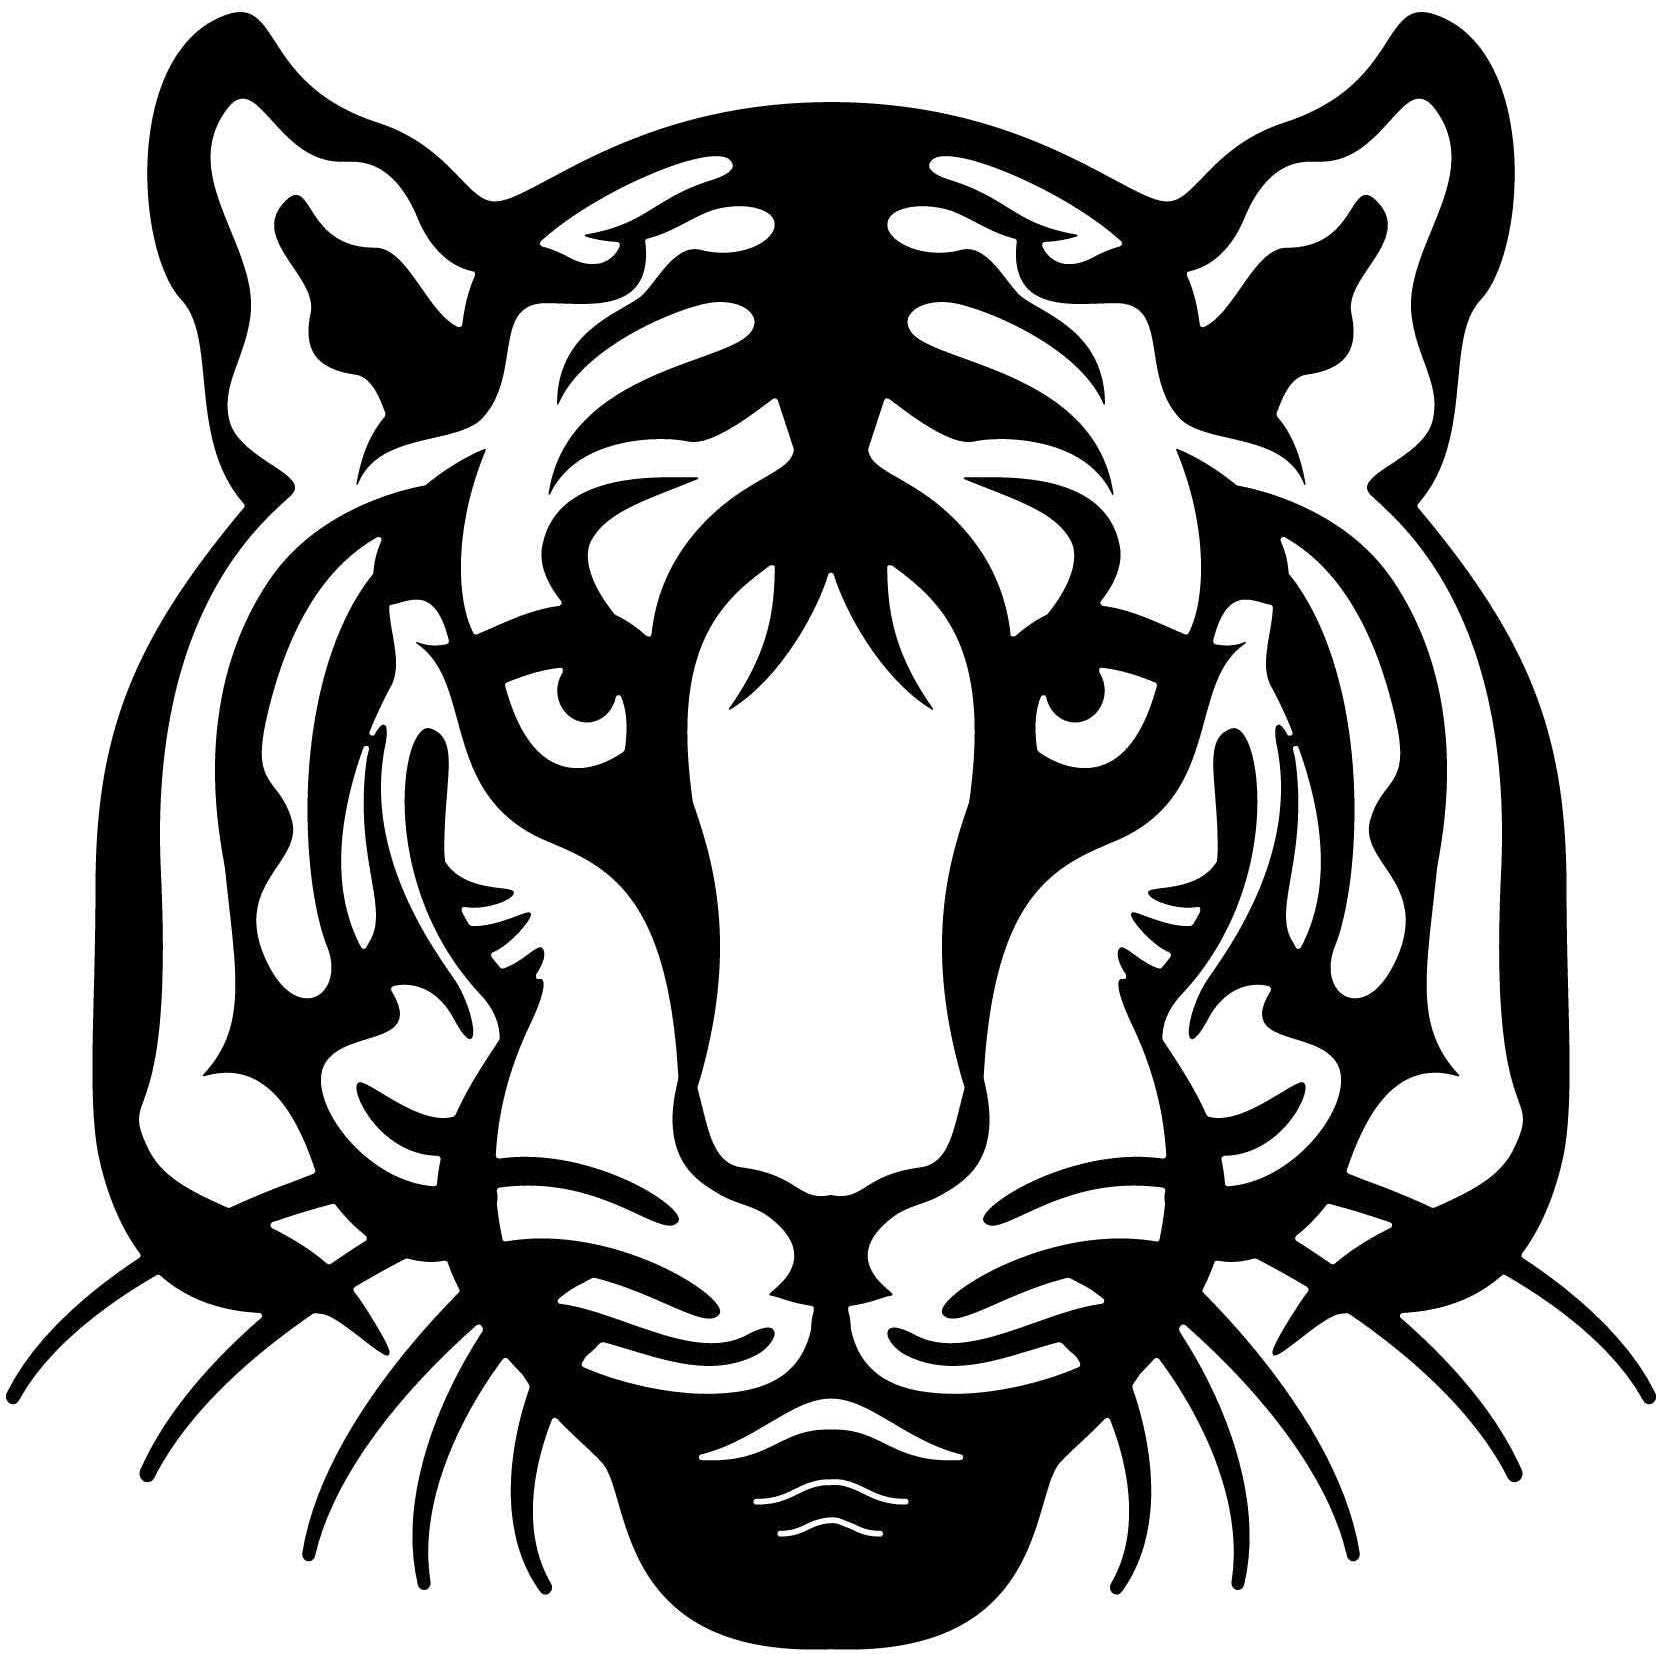 Bengal Tiger Face-DXFforCNC.com-DXF Files cut ready cnc machines